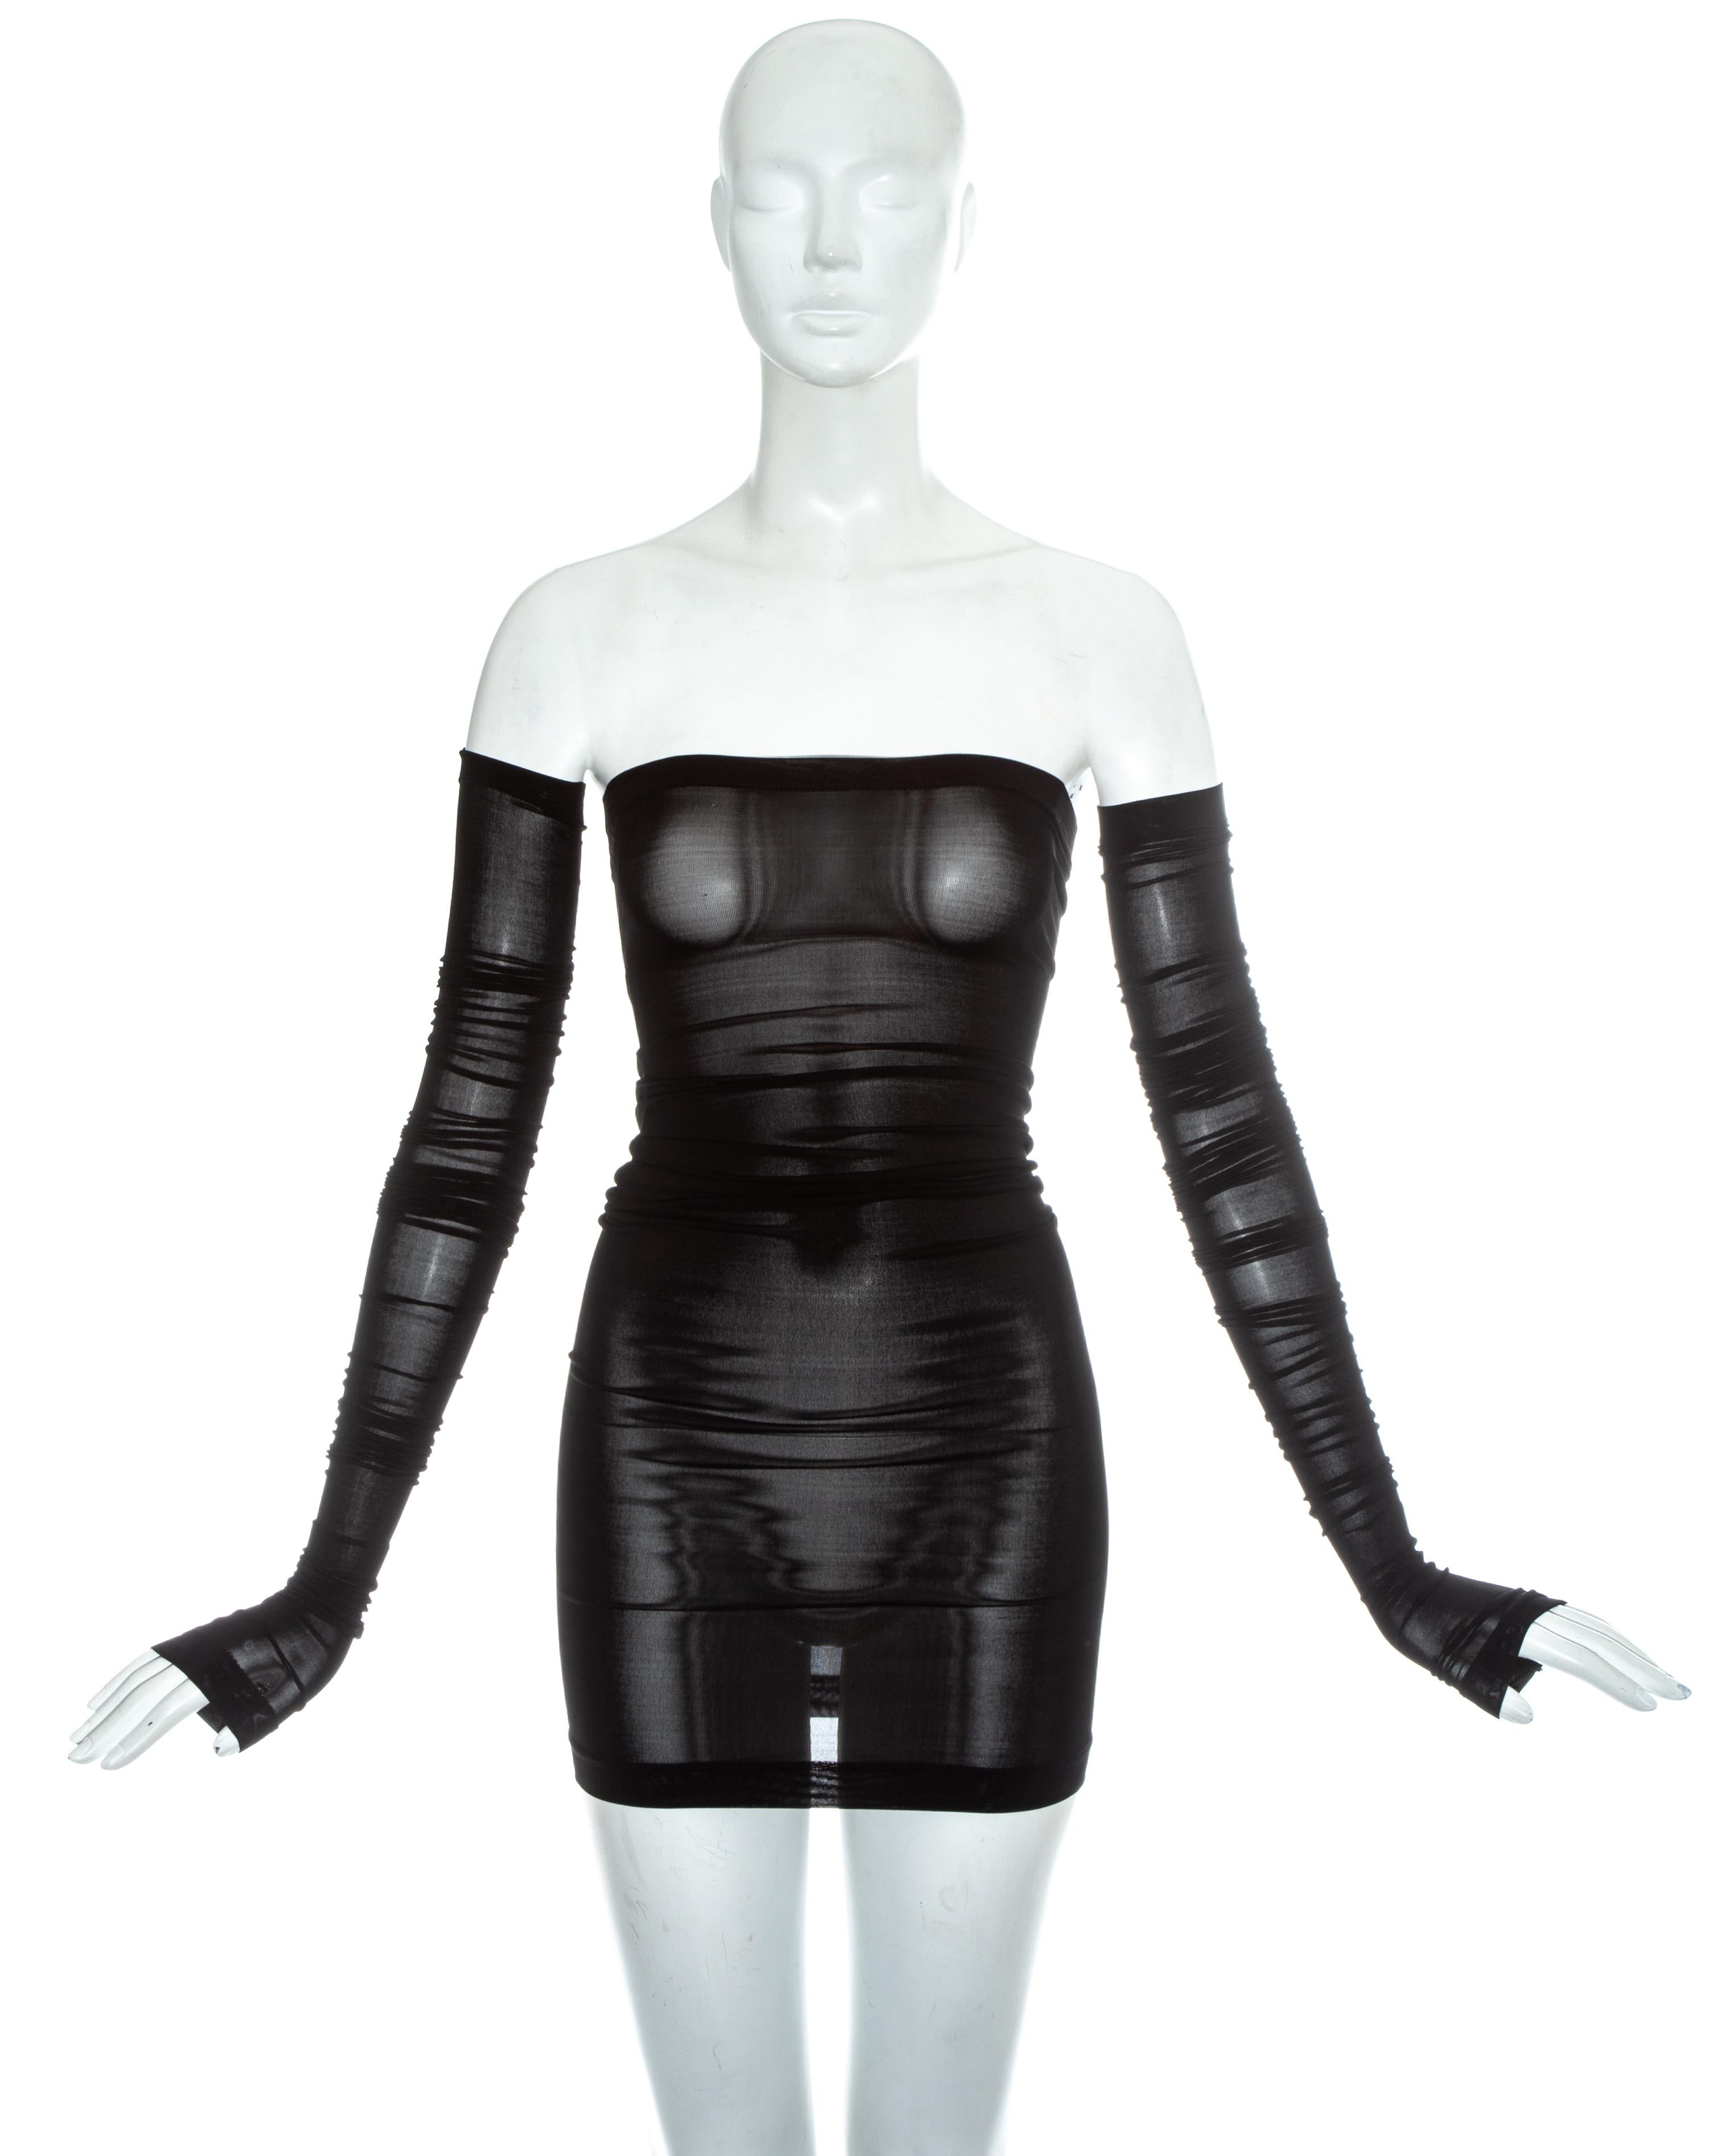 Dolce & Gabbana black spandex figure hugging strapless mini dress and detaches sleeves

Spring-Summer 2003